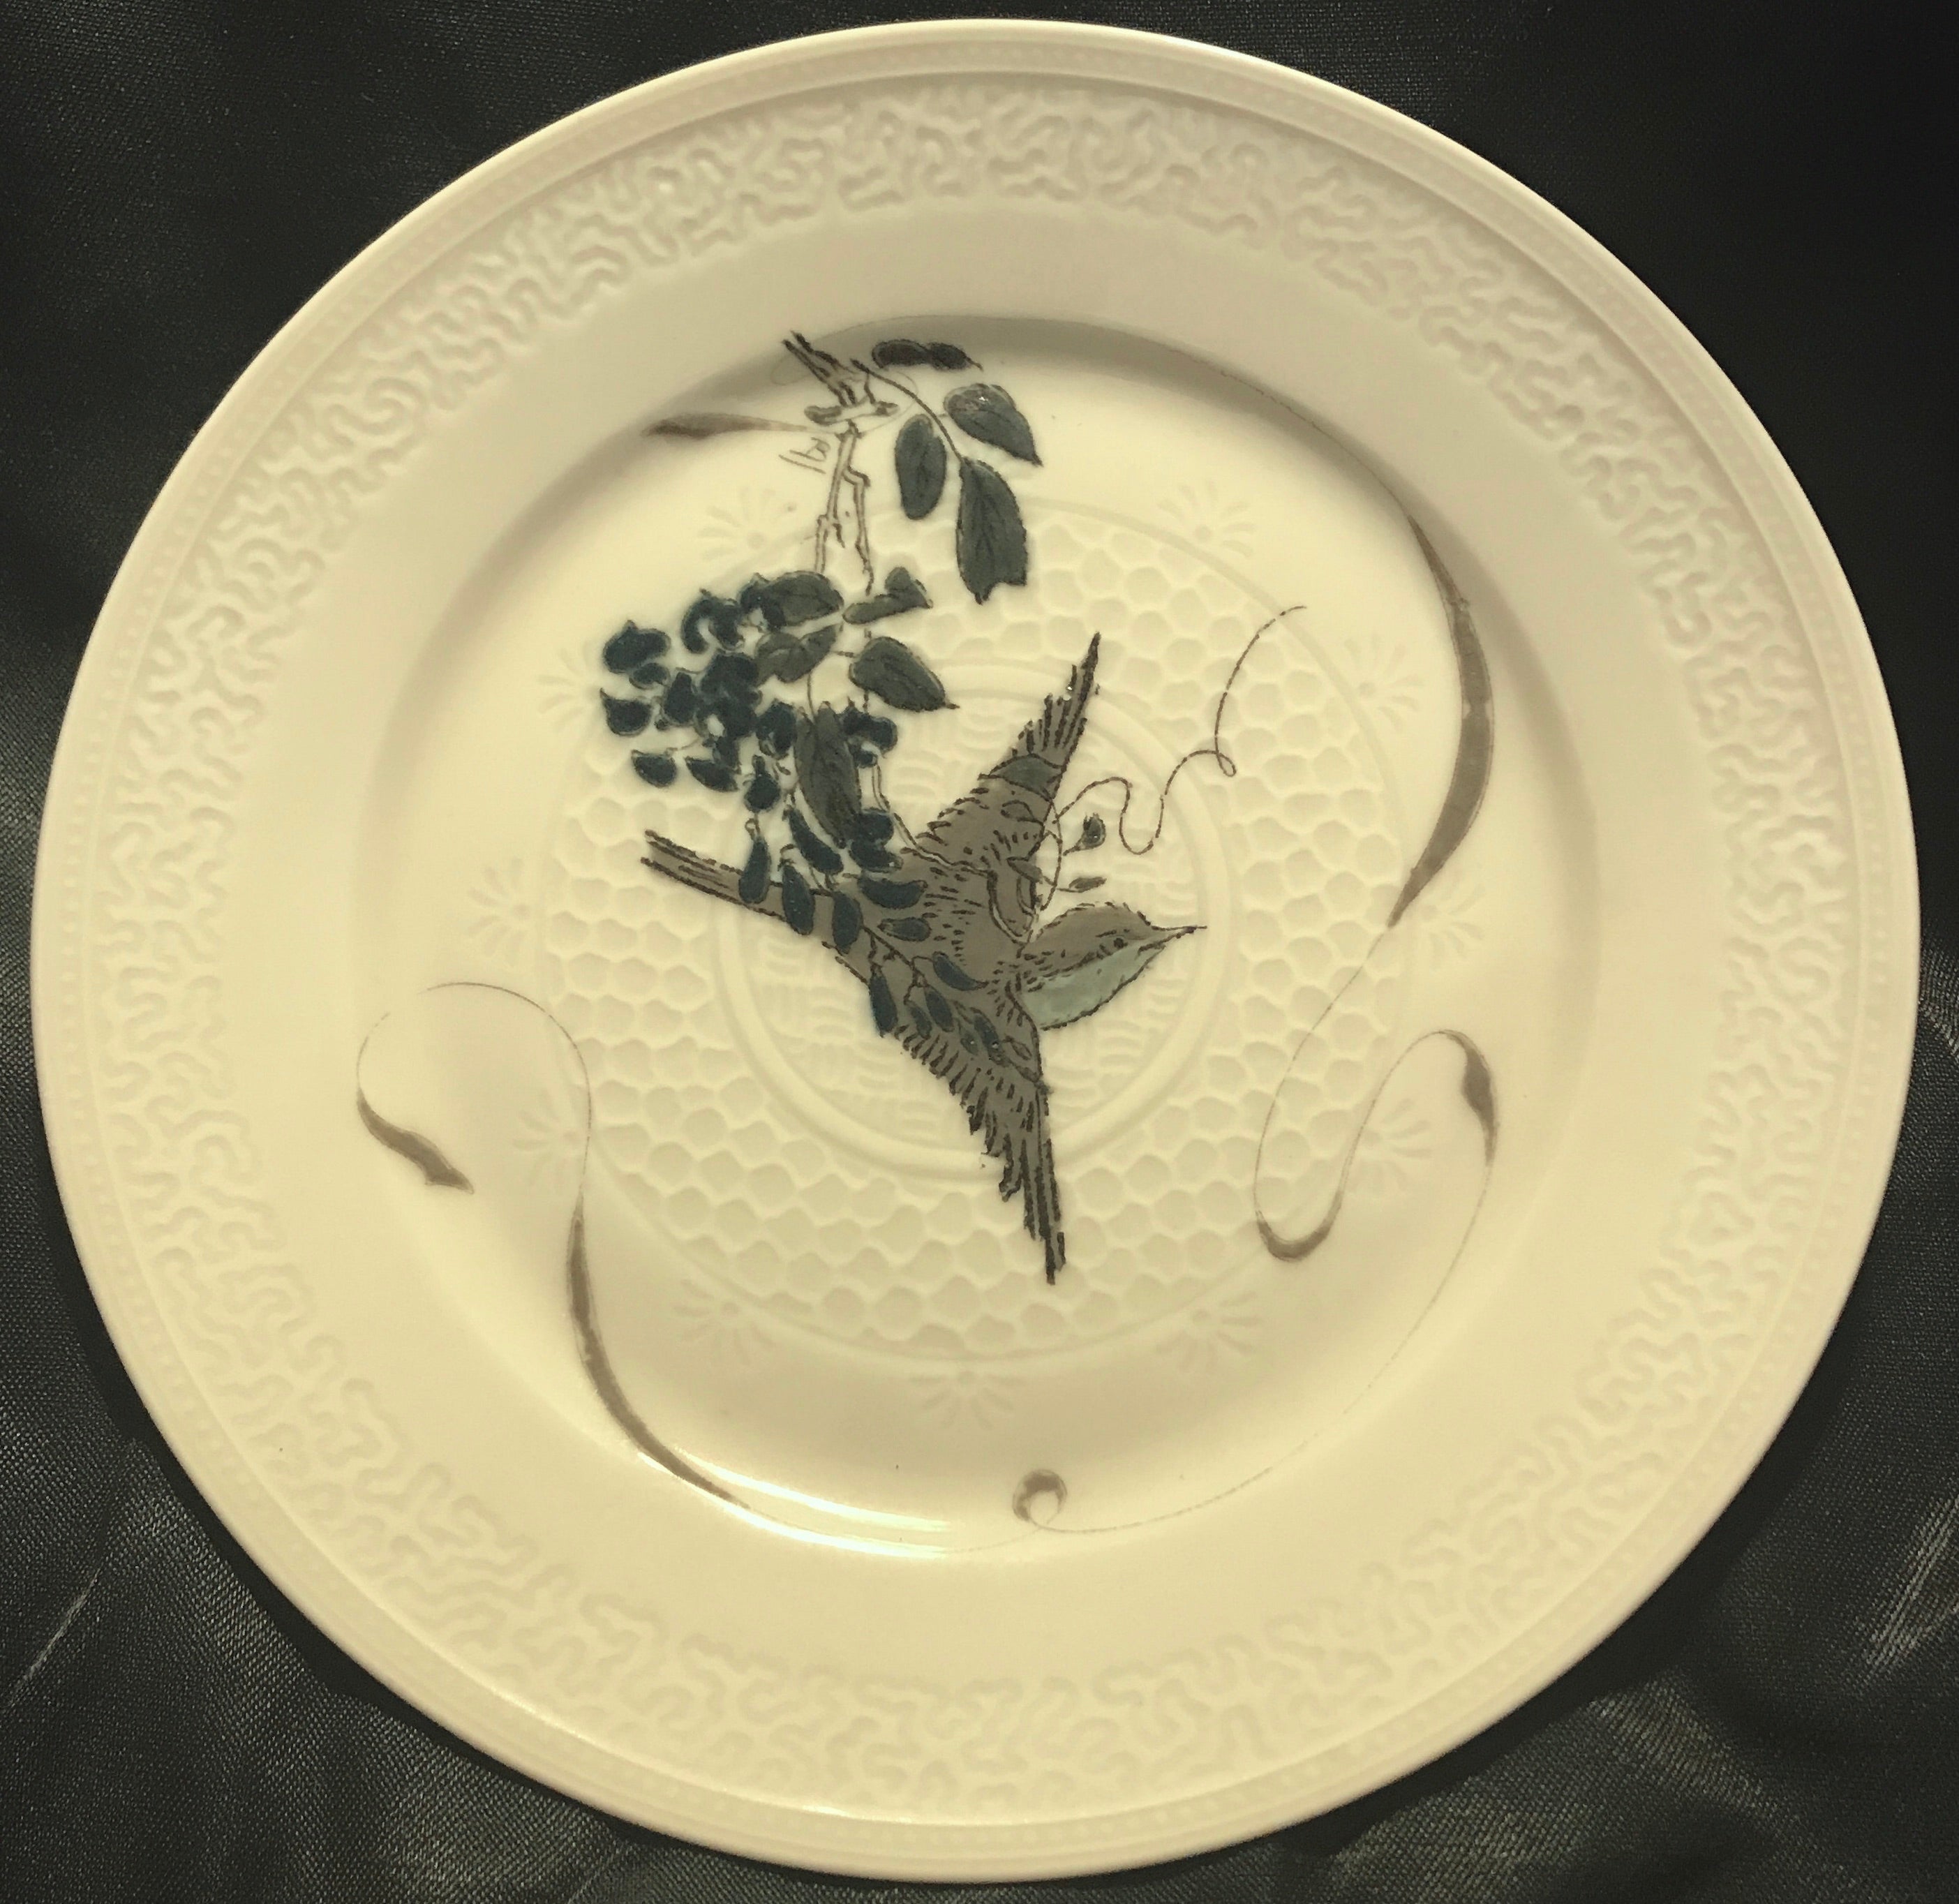 Haviland Limoges Japonisme Porcelain Plate from the Service Fleurs et Rubans